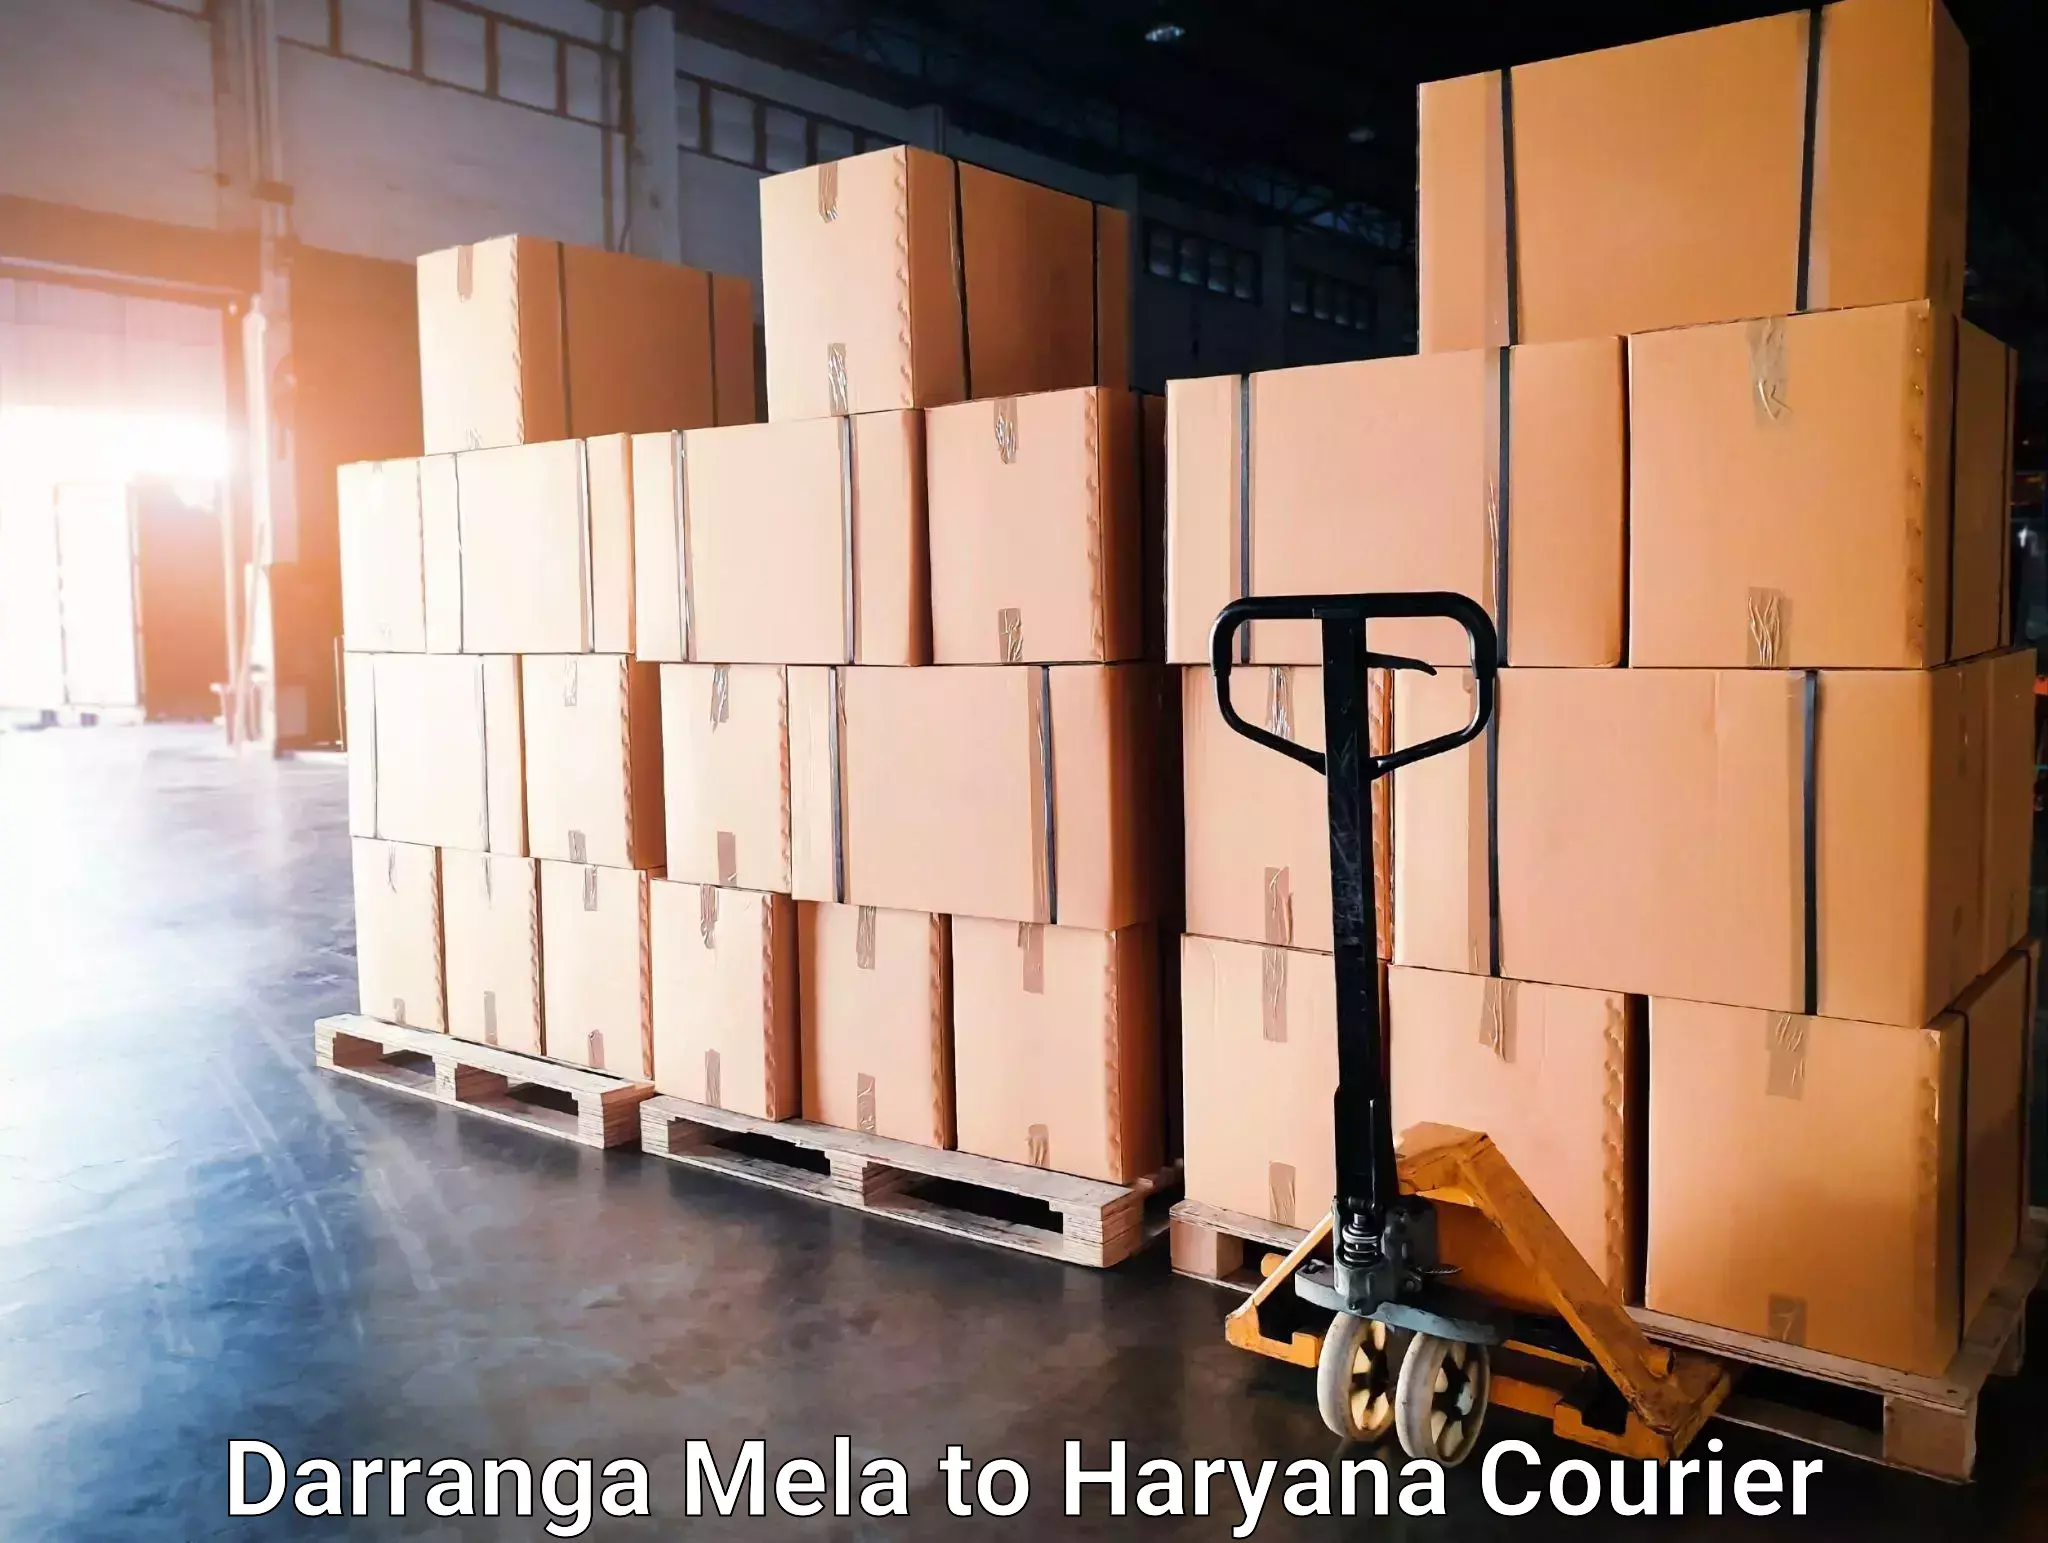 Express delivery network Darranga Mela to Bilaspur Haryana